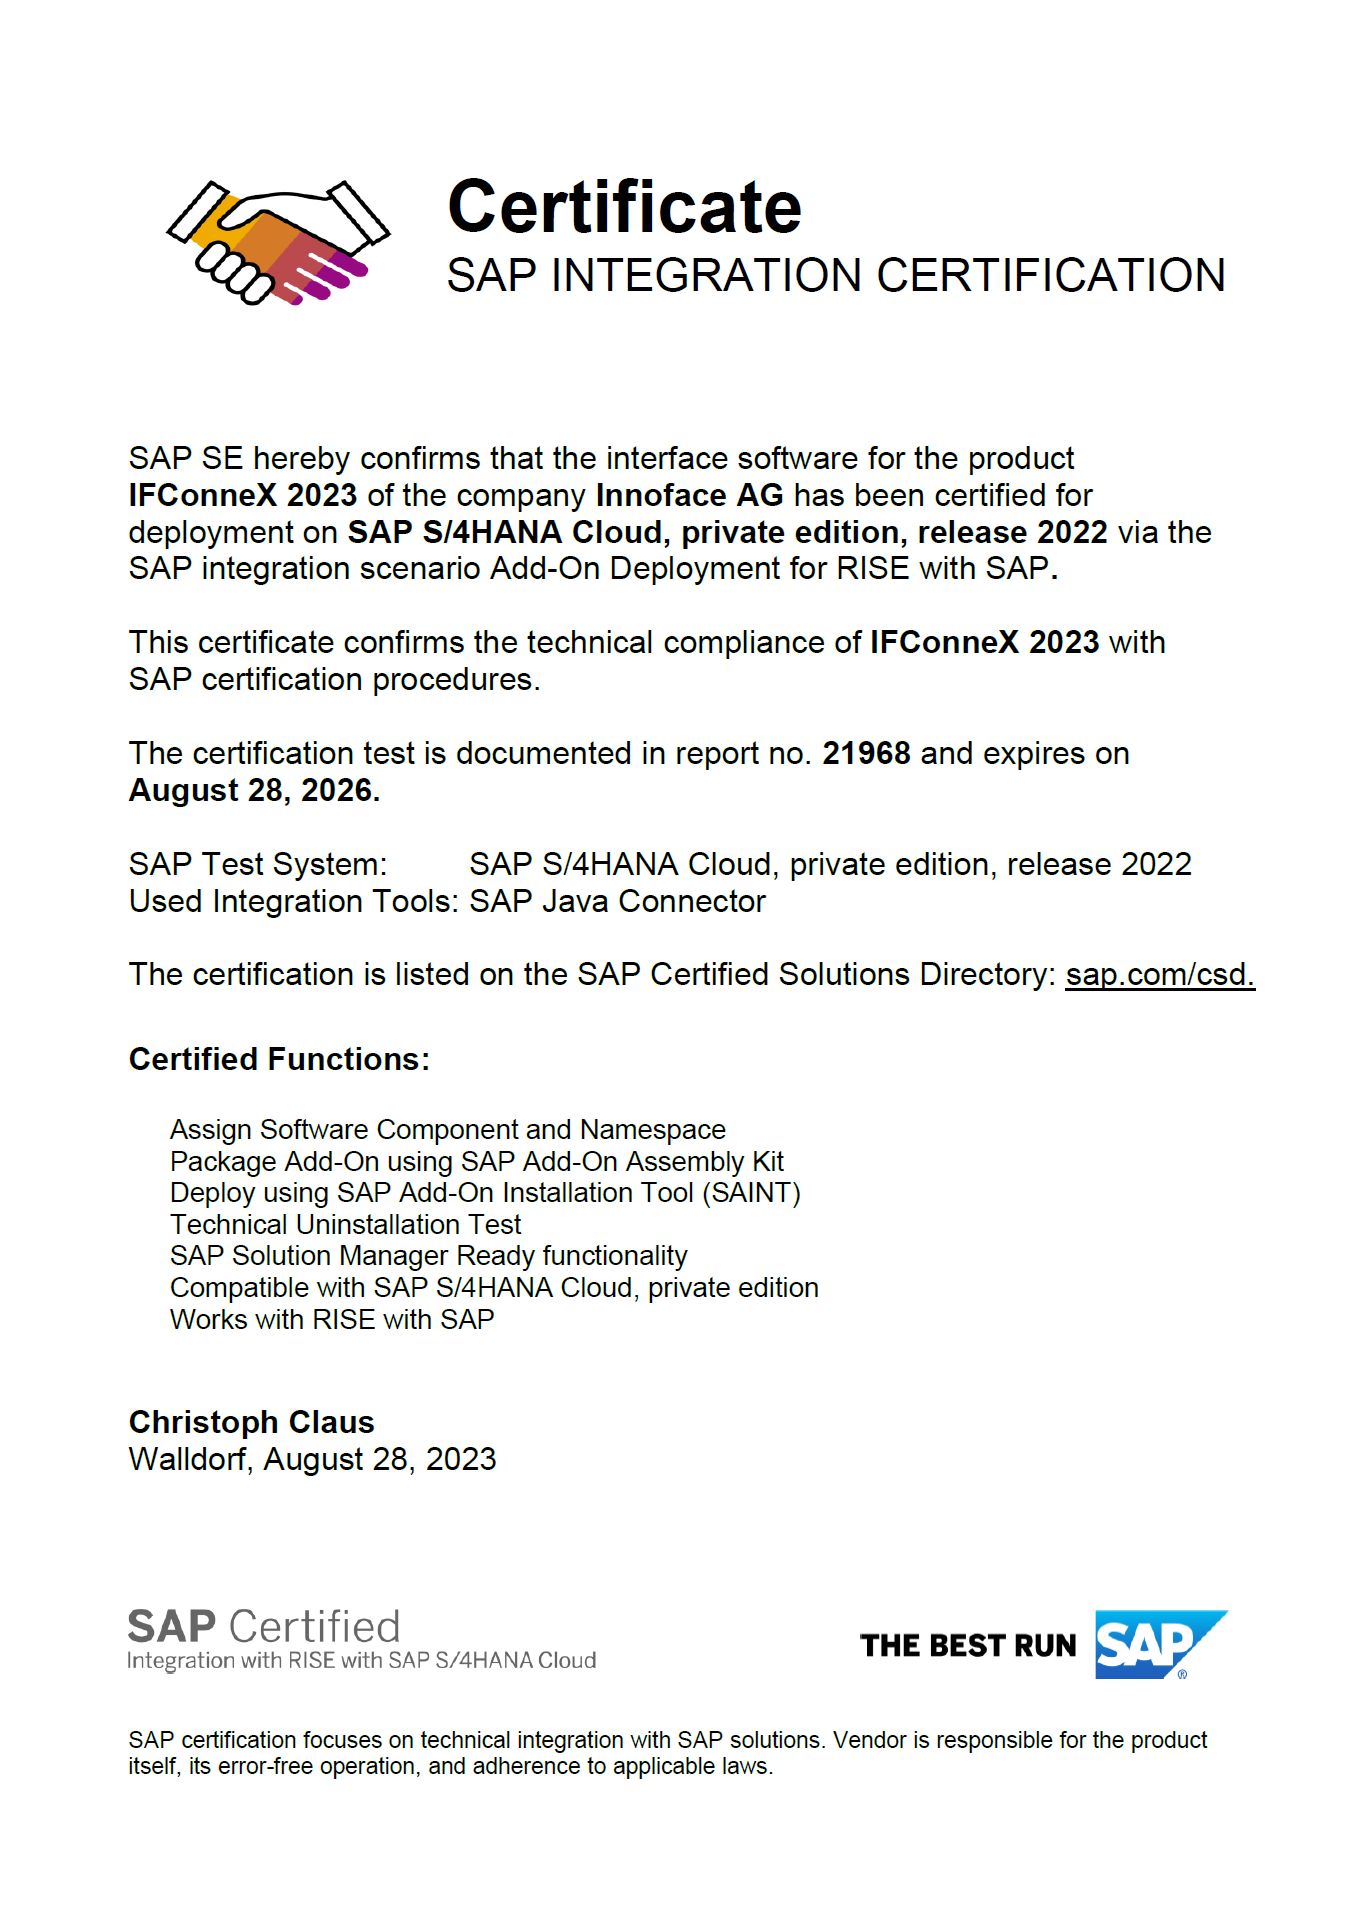 Certificate SAP IFConneX